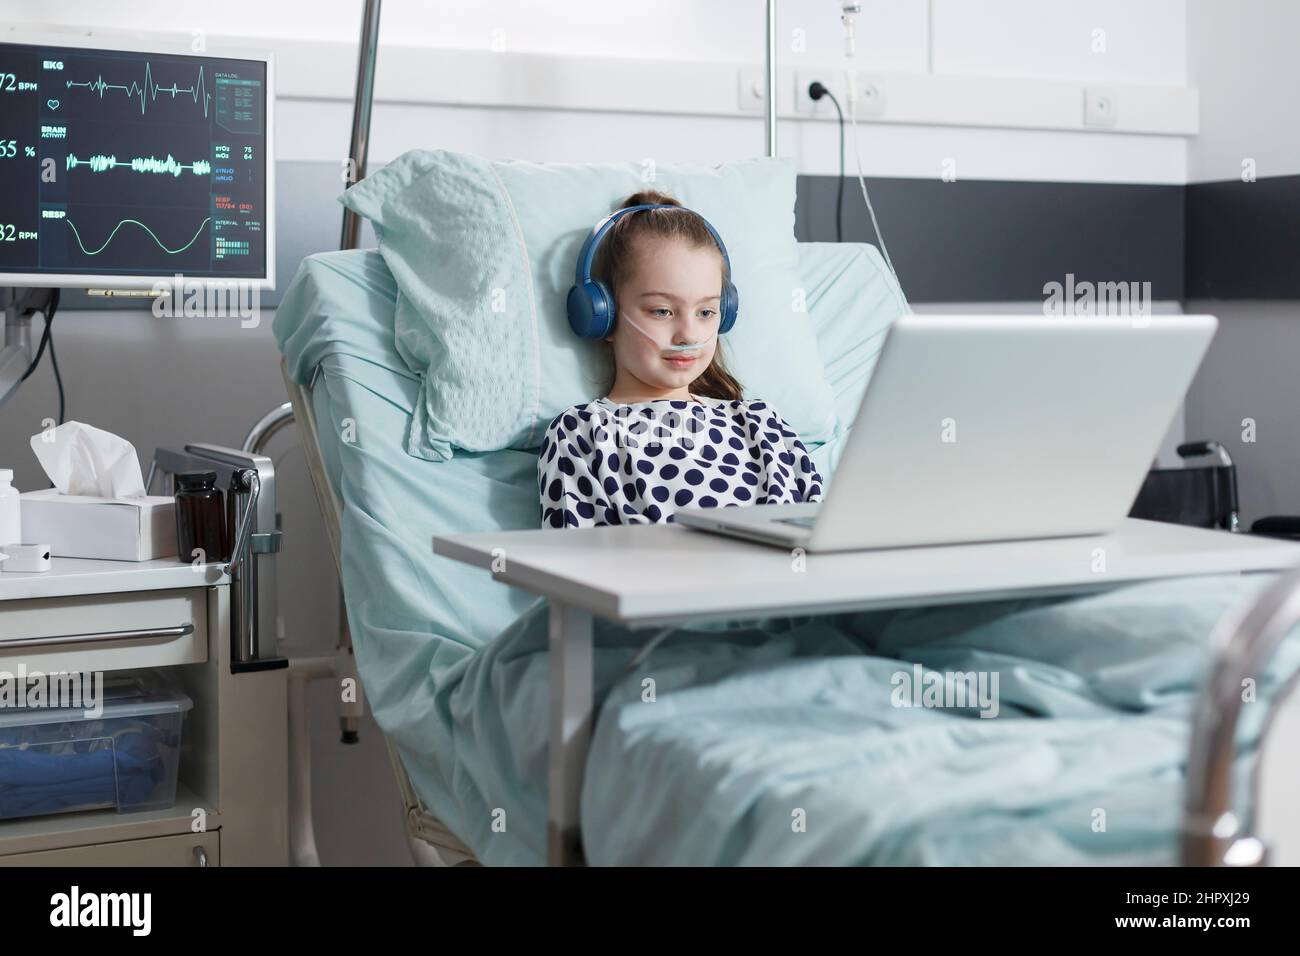 Humorous image of shrek in a hospital bed